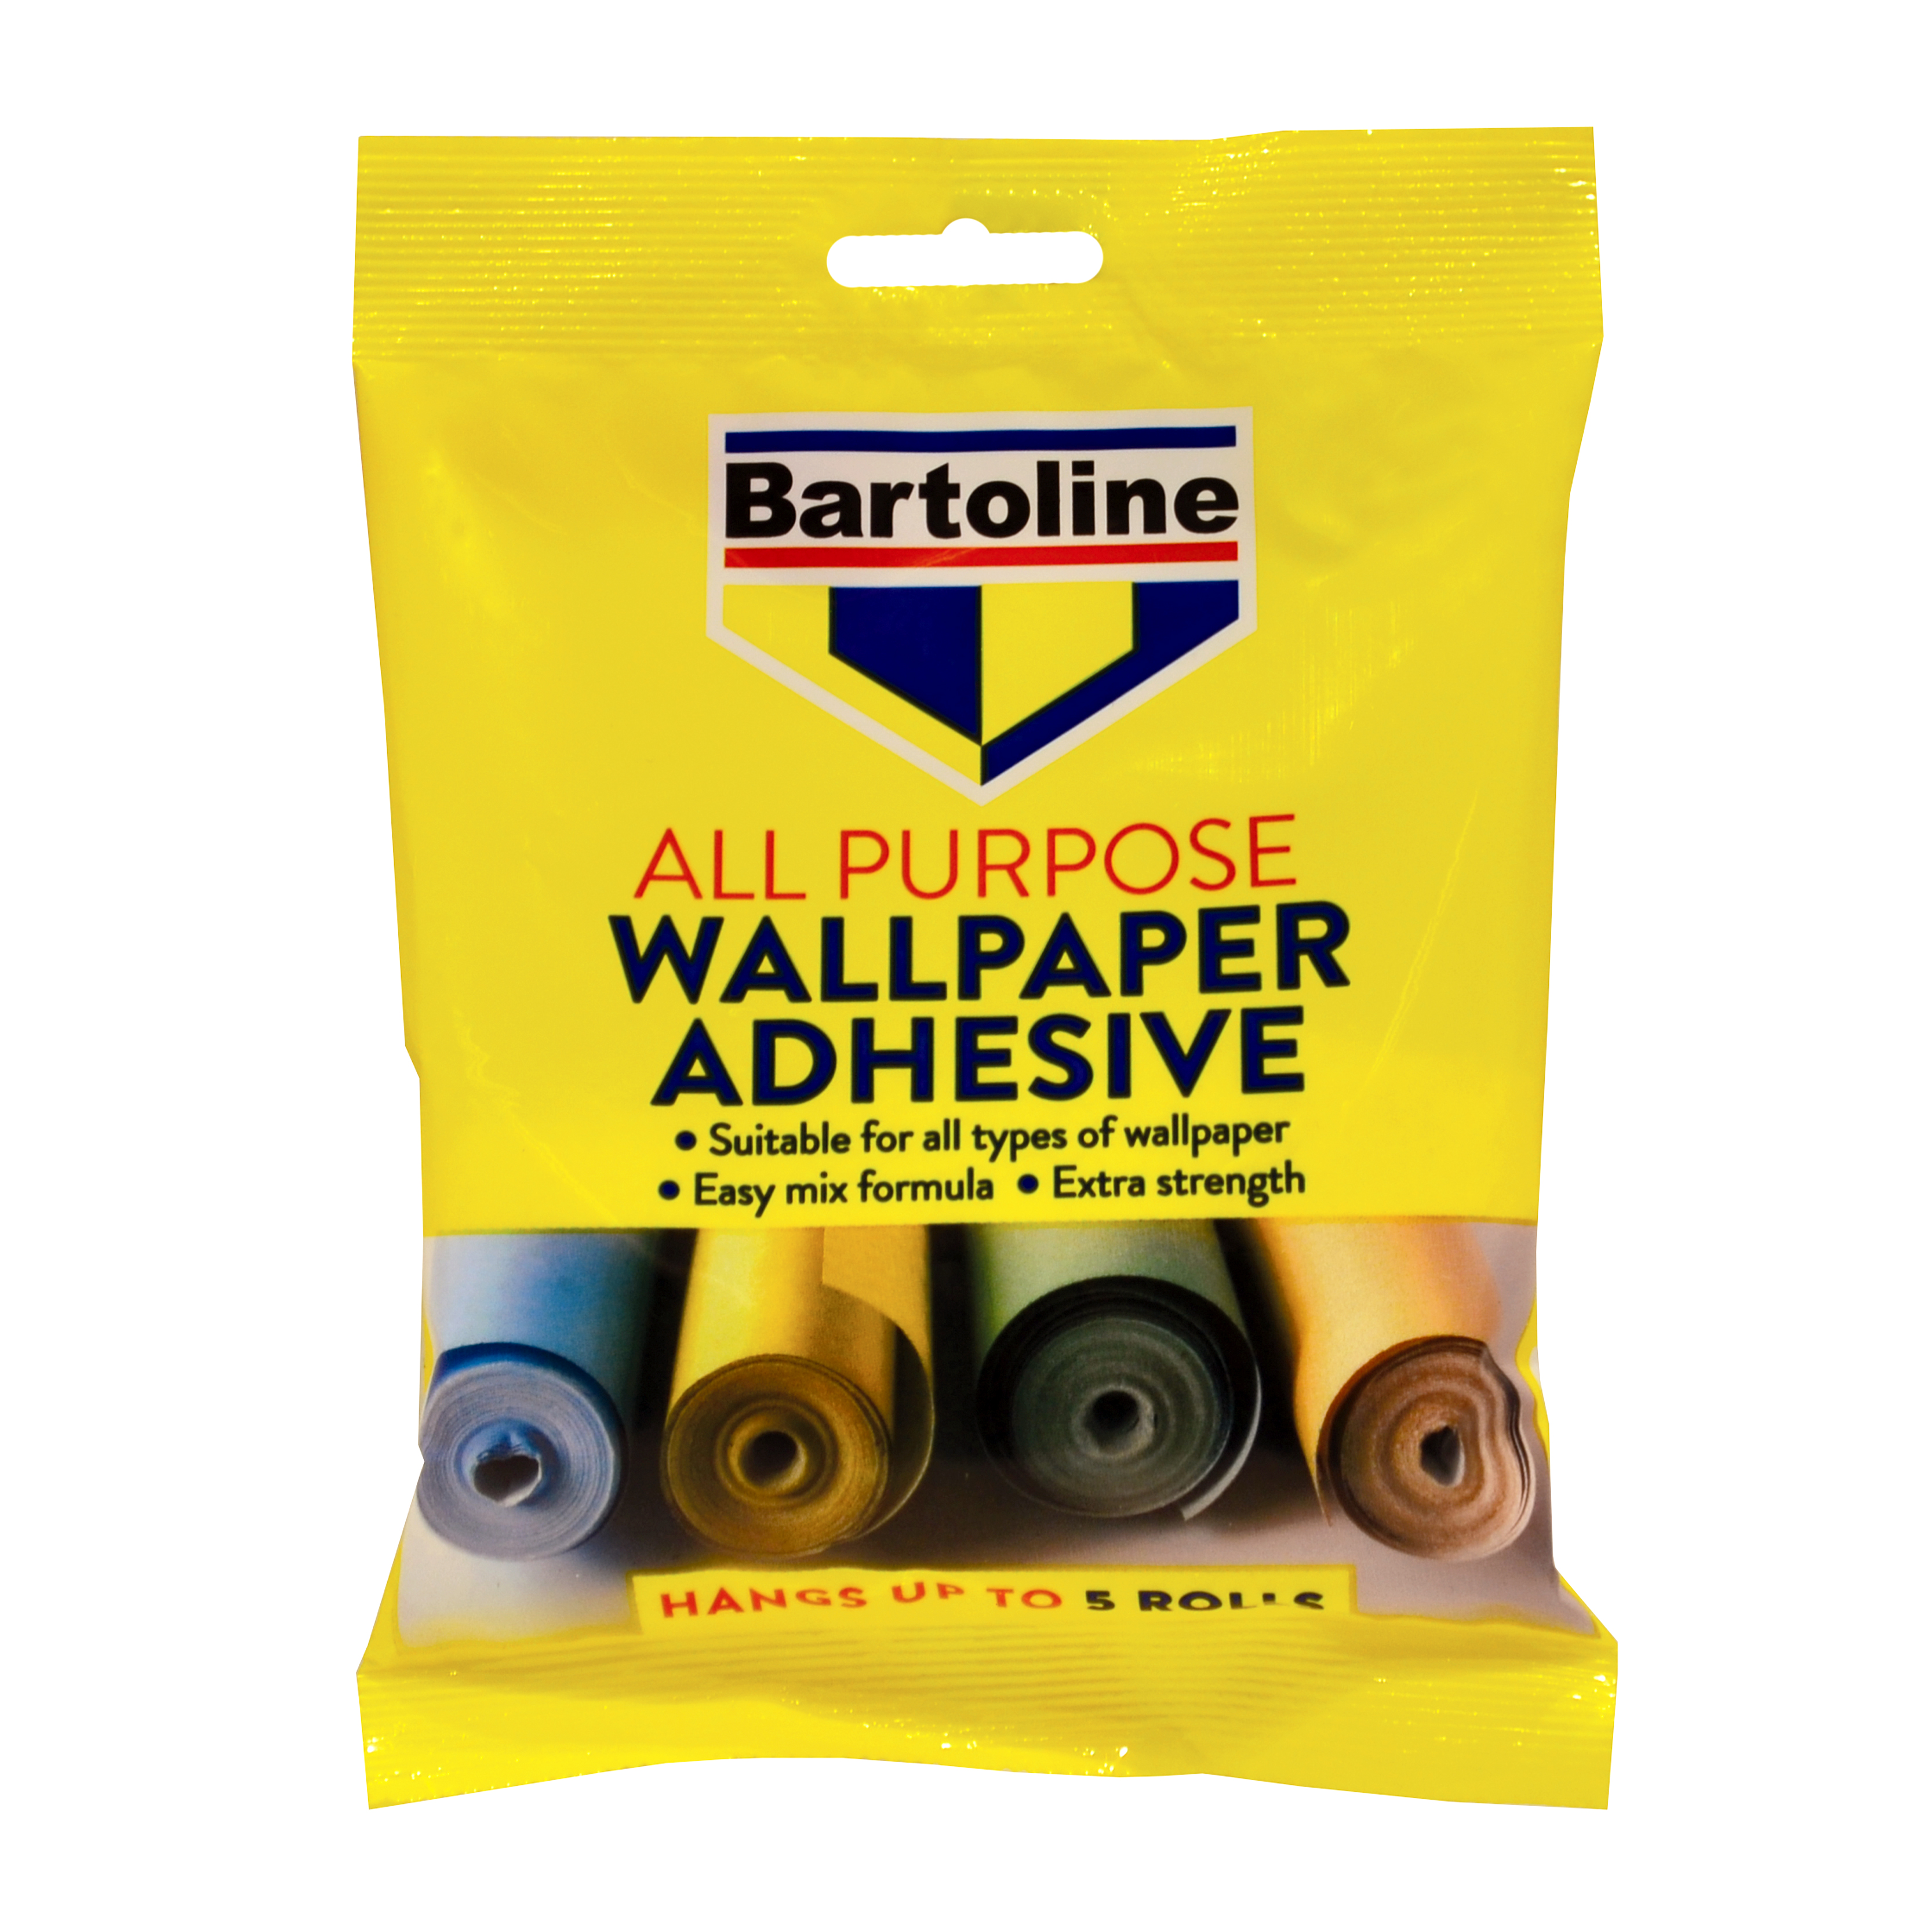 Centurion - Bartoline All Purpose Wallpaper Adhesive, Small (5 Rolls)